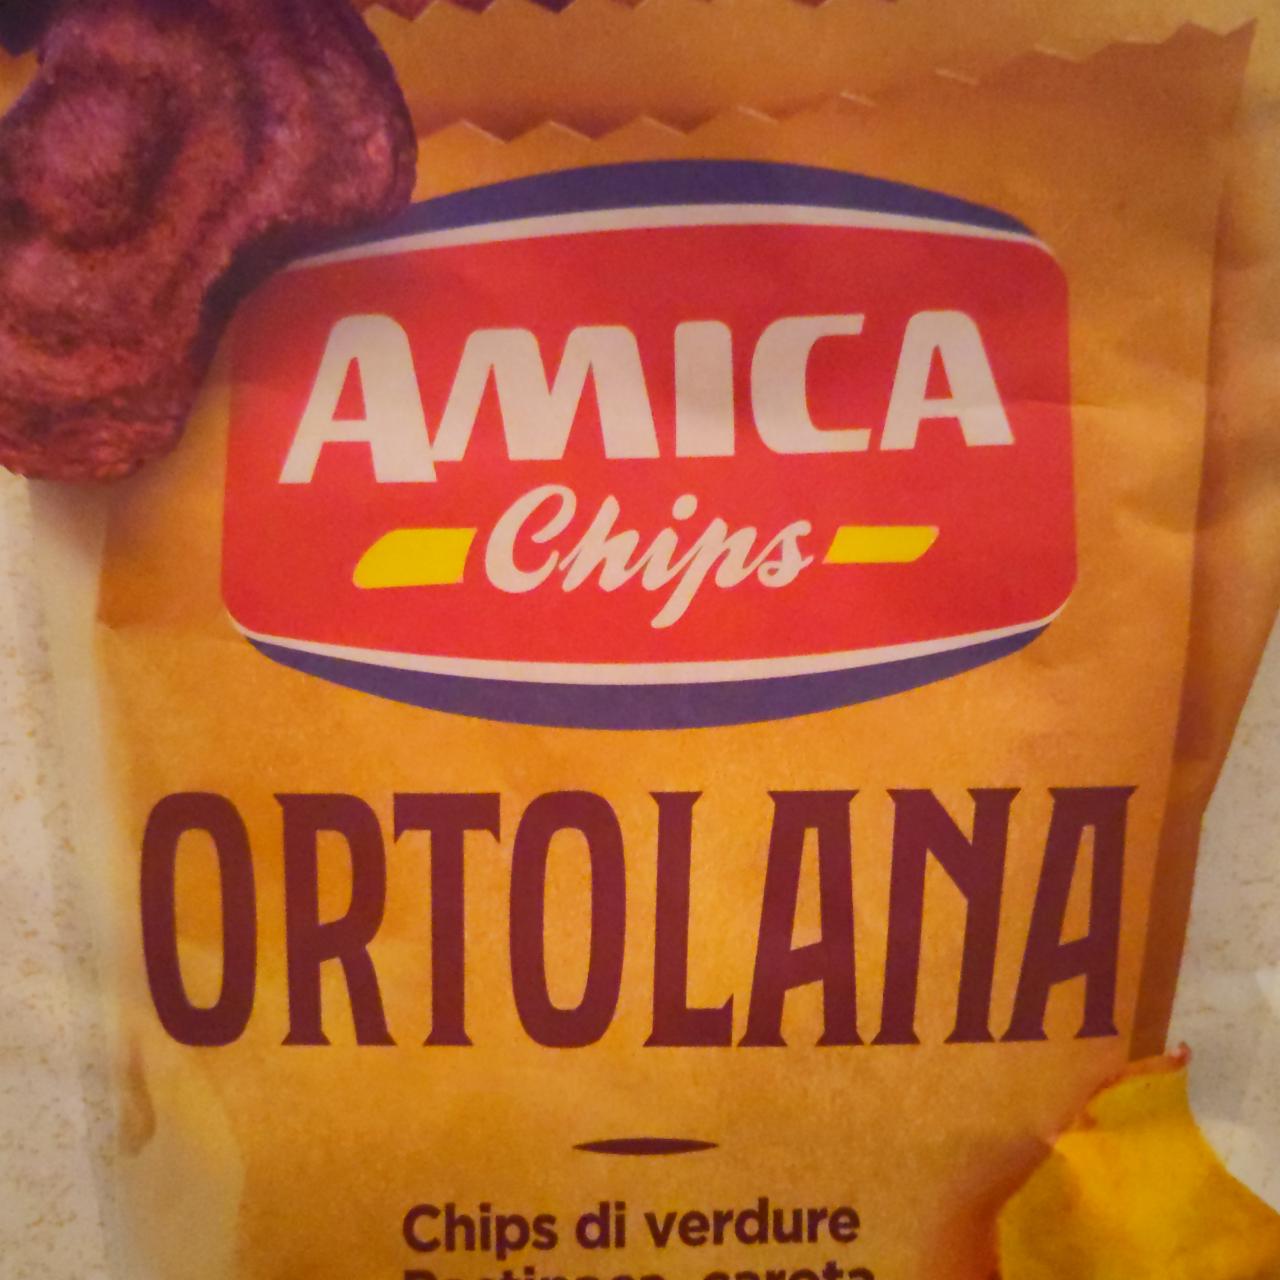 Fotografie - Ortolana Amica Chips